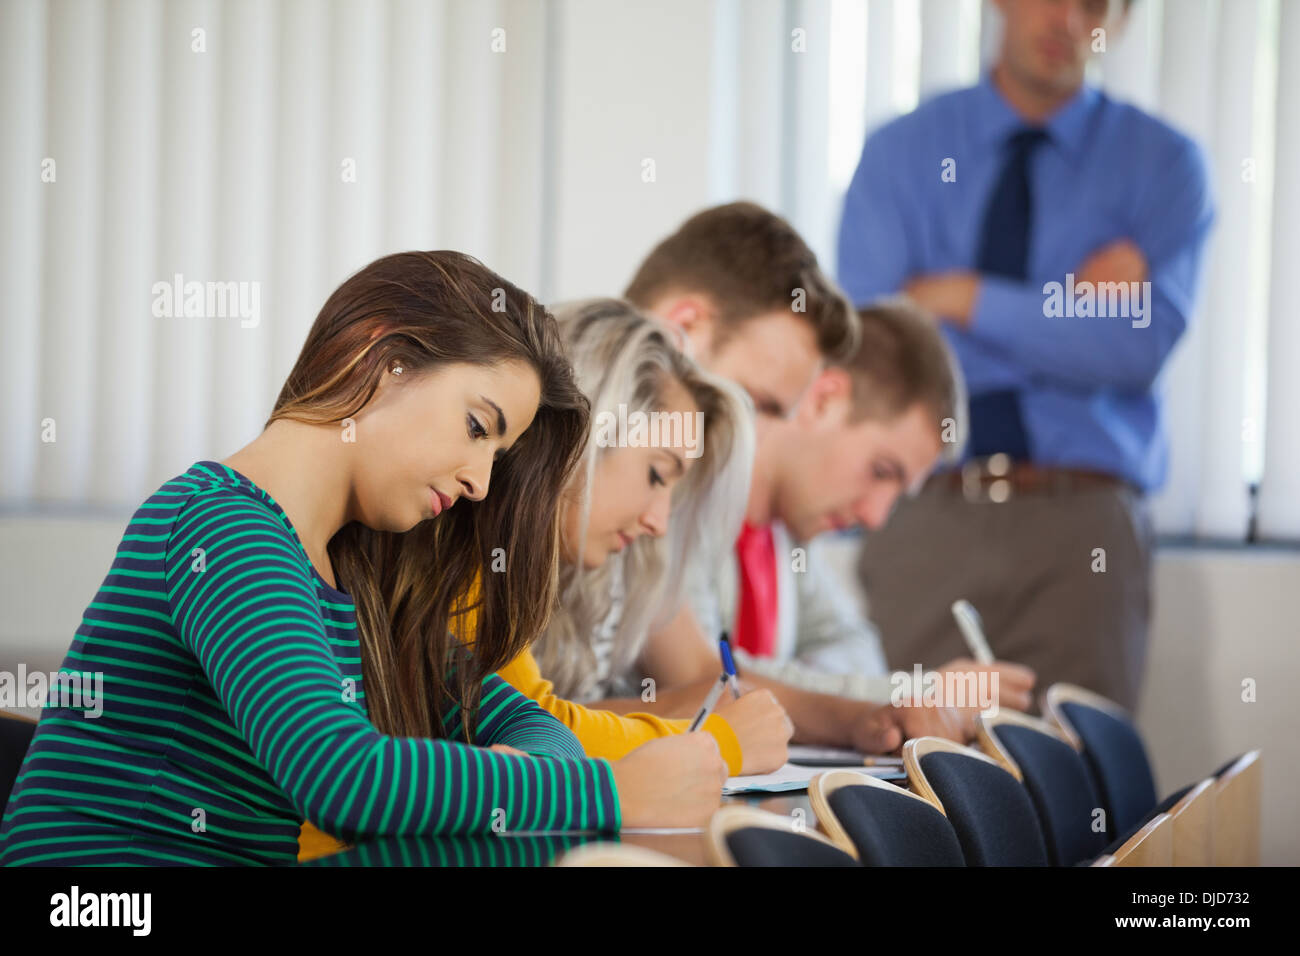 Serious students having an exam Stock Photo